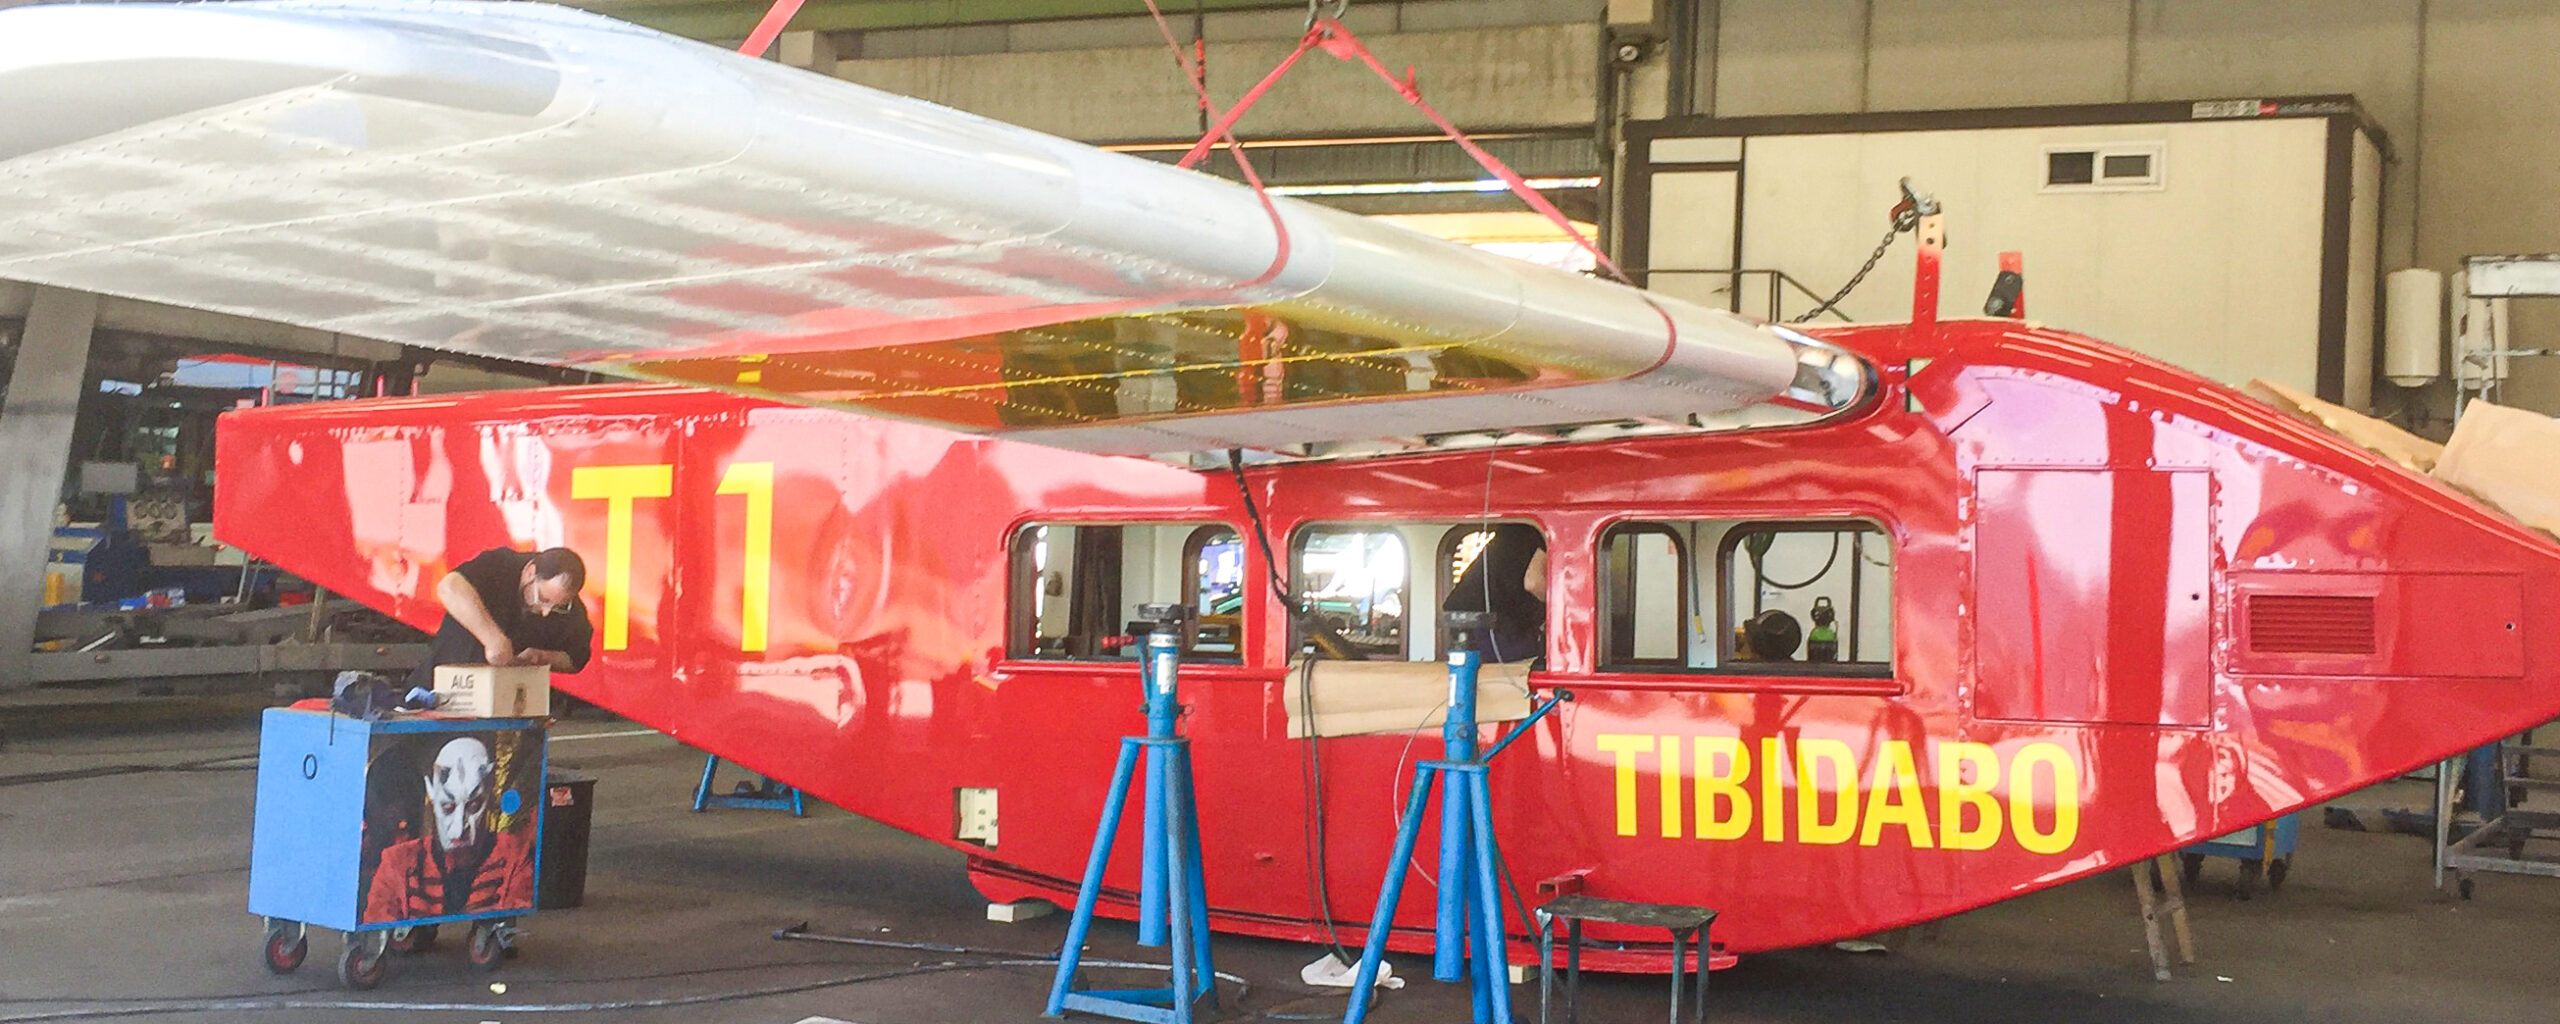 avion tibidabo